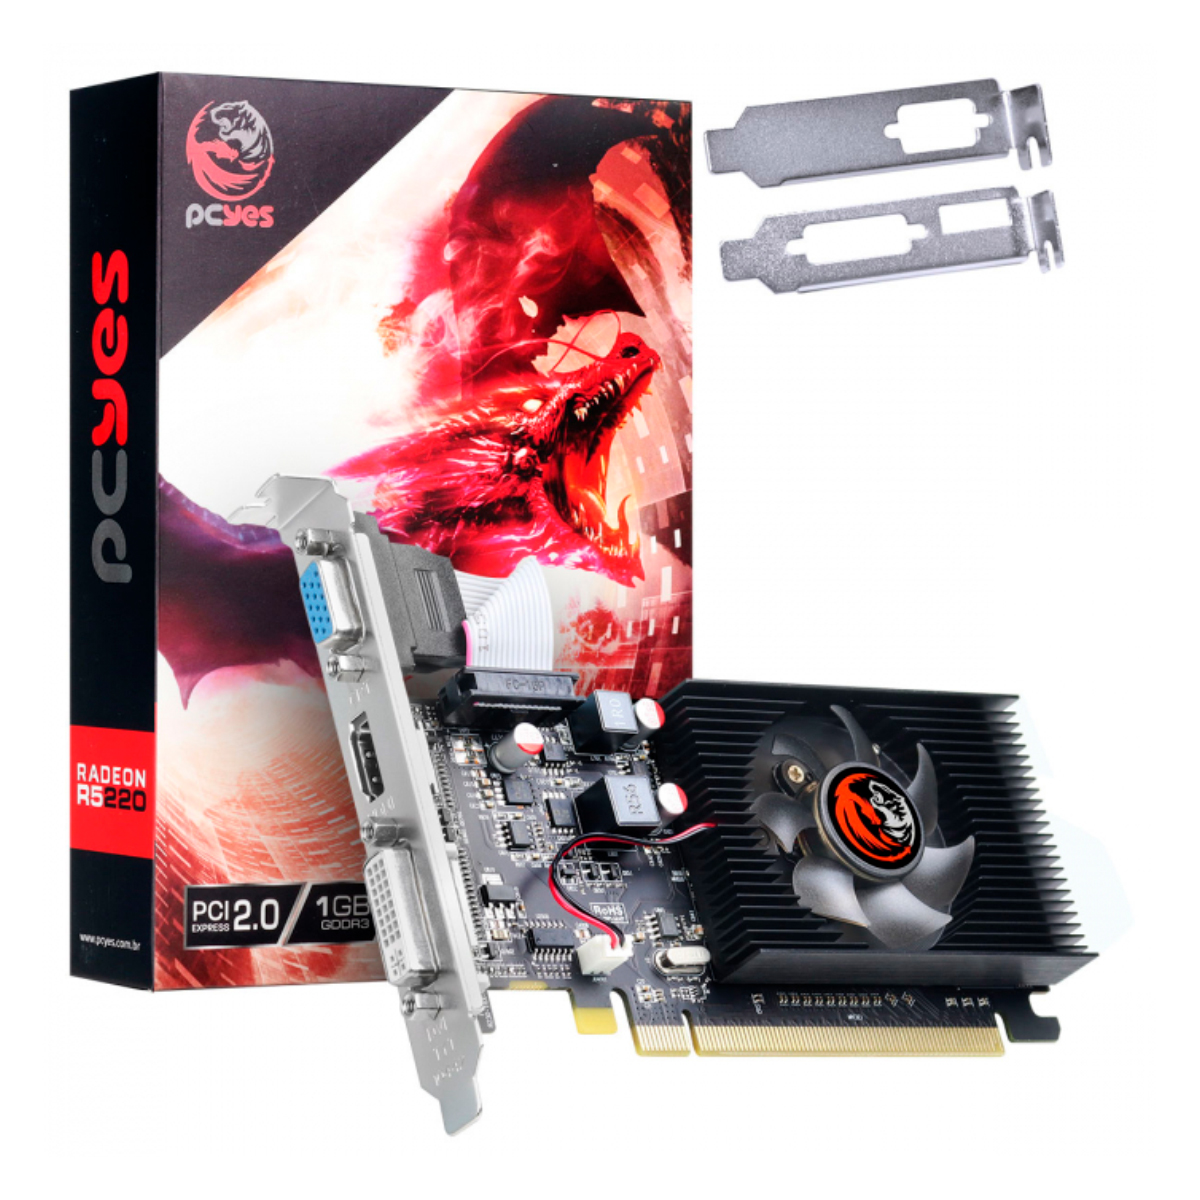 AMD Radeon R5 220 2GB GDDR3 64bits - Low Profile - PCYes PVR52202GBR364